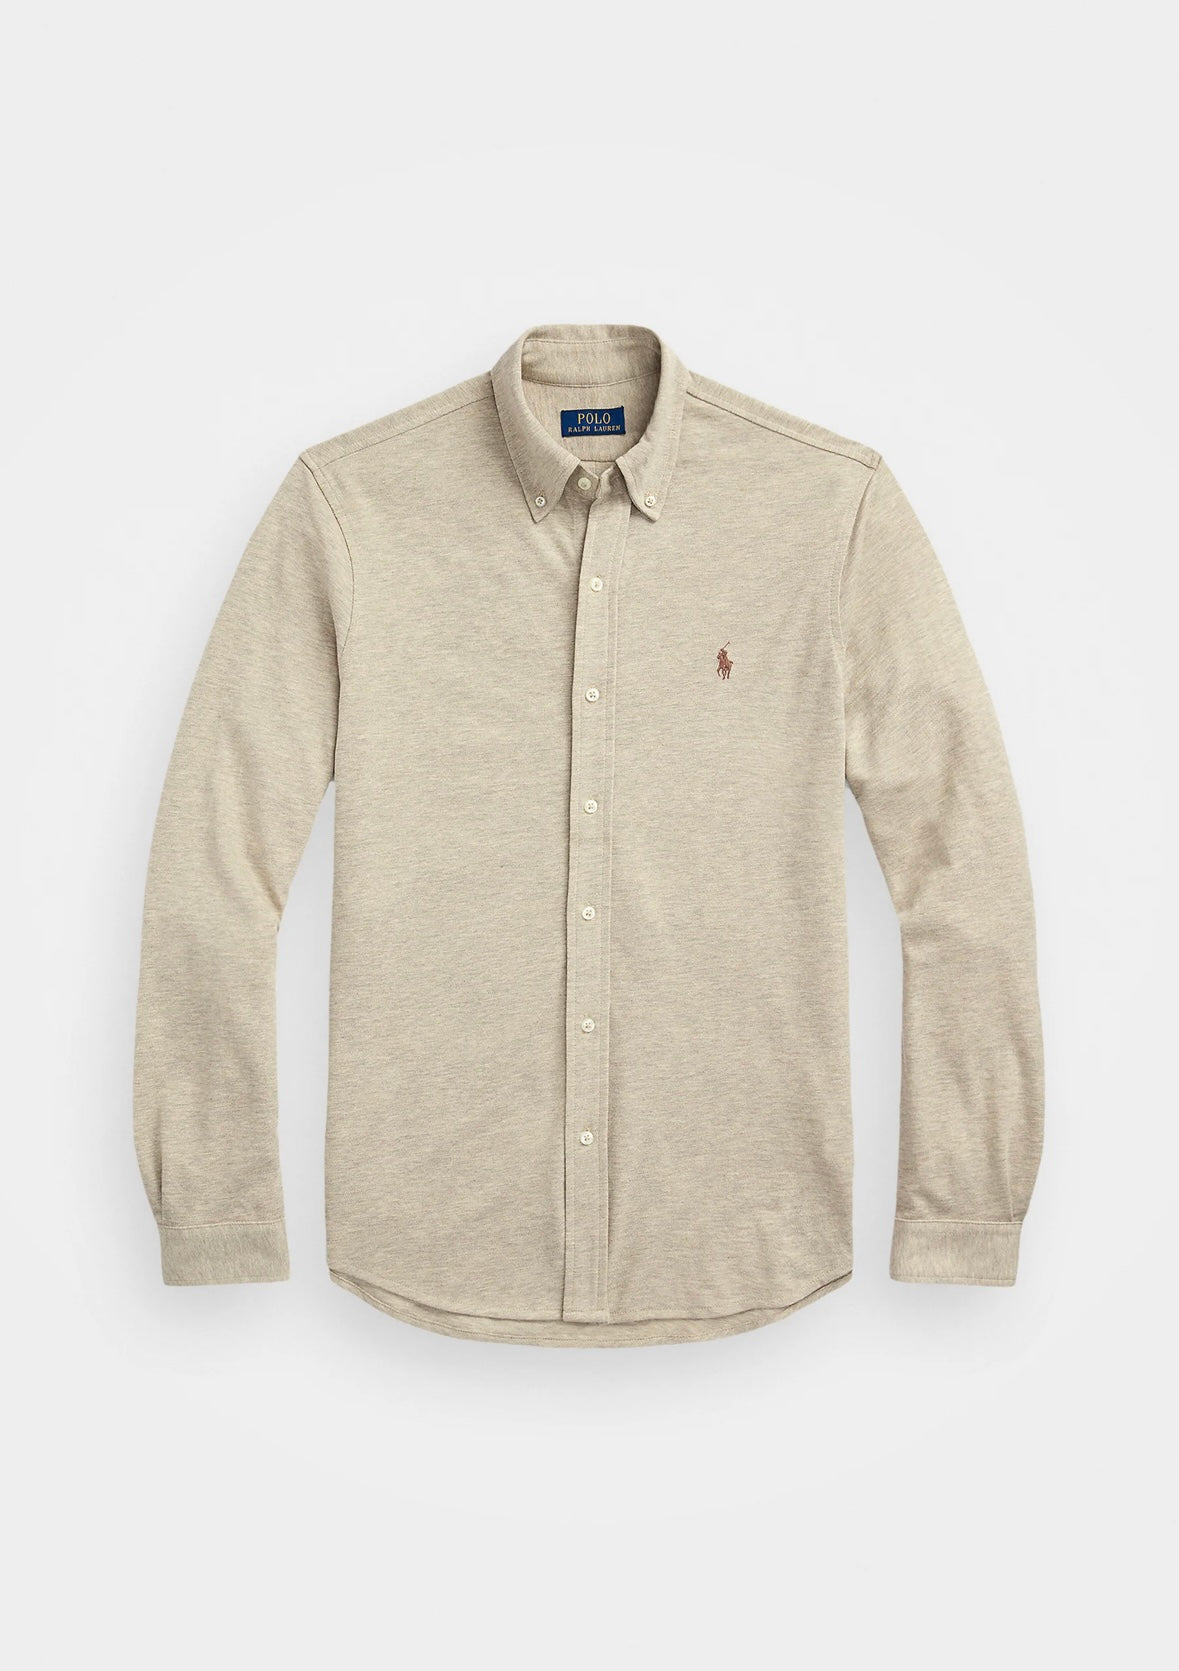 Polo Ralph Lauren Mesh shirt - Tuscan Beige